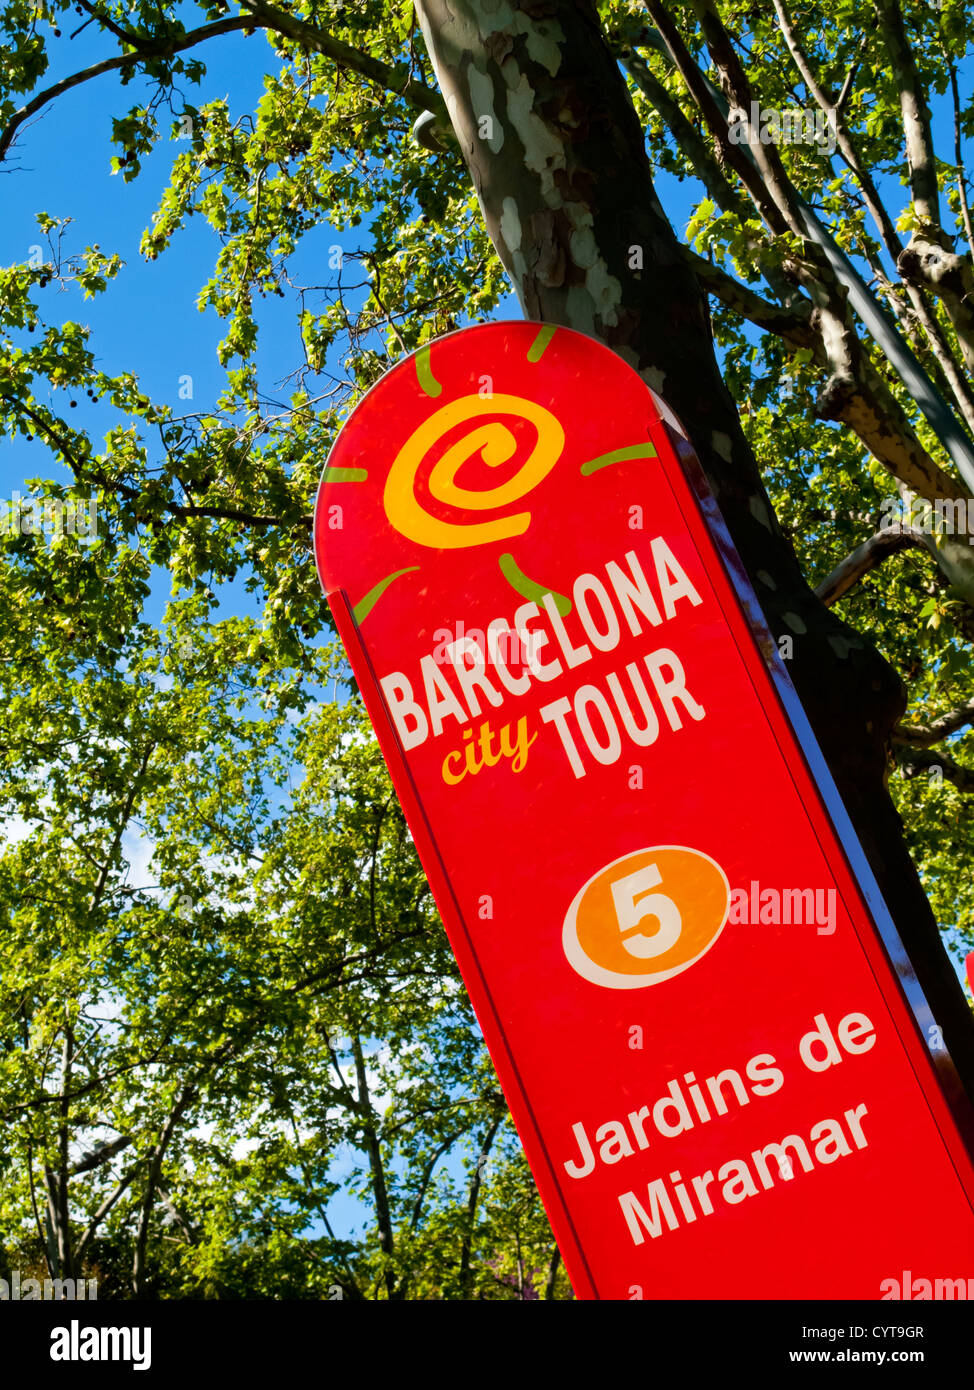 Bus stop on Barcelona City Tour tourist bus outside the Jardins de Miramar gardens Barcelona Spain Stock Photo